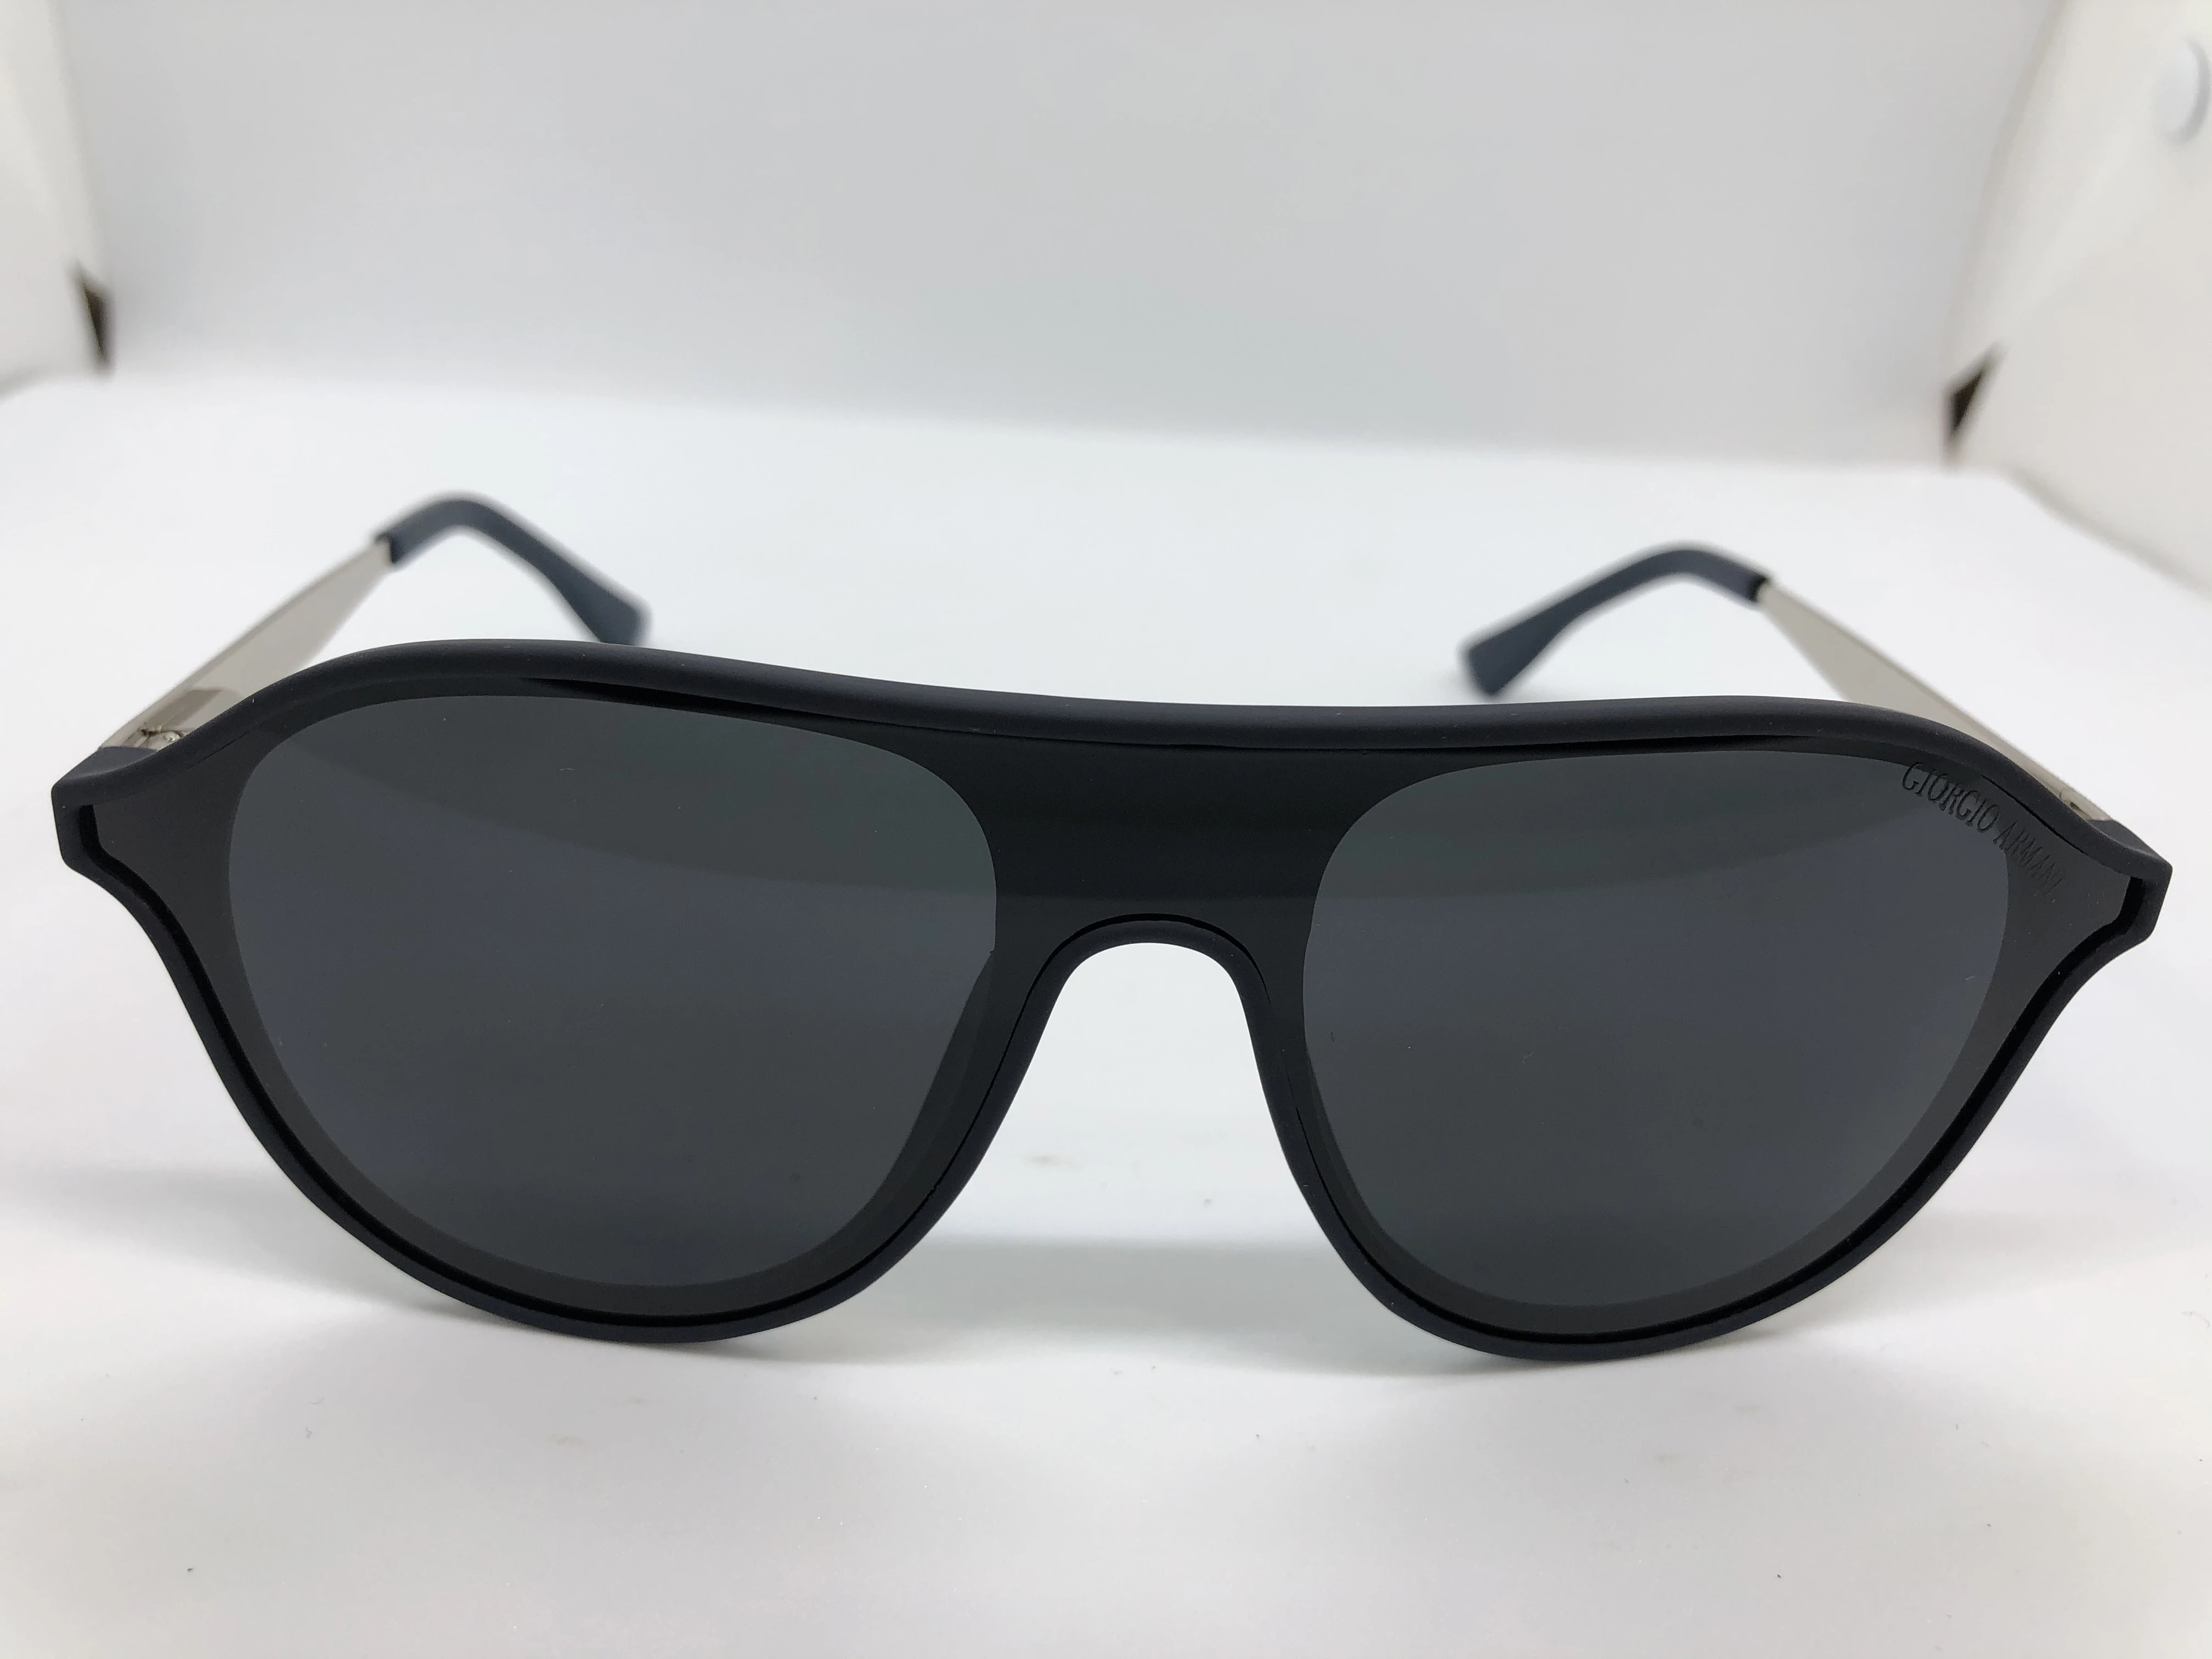 Sunglasses - from Giorgio Armani - Polycarbonate jewelery - black lenses - silver metal arm - with brand logo Navy * White - men